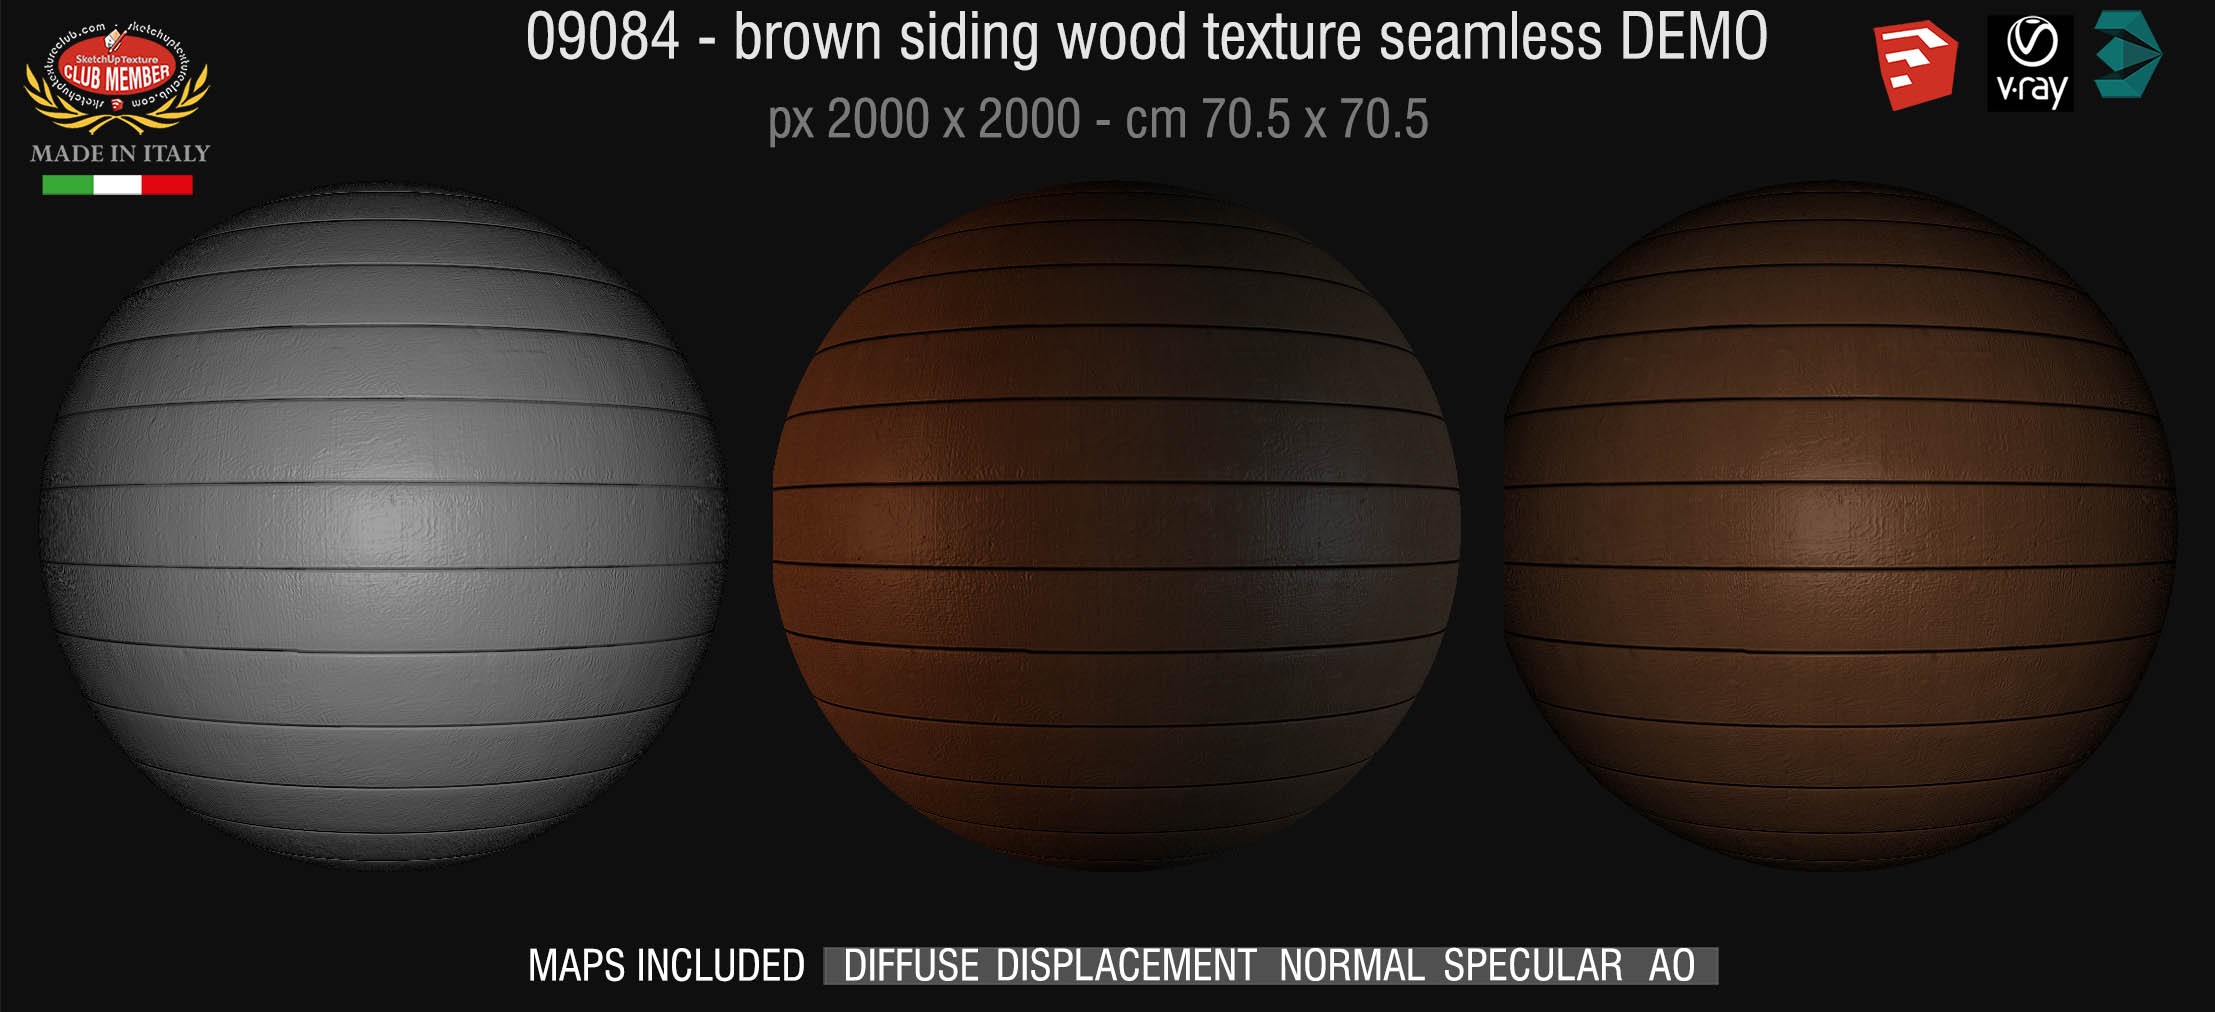 09084 HR Brown siding wood texture + maps DEMO